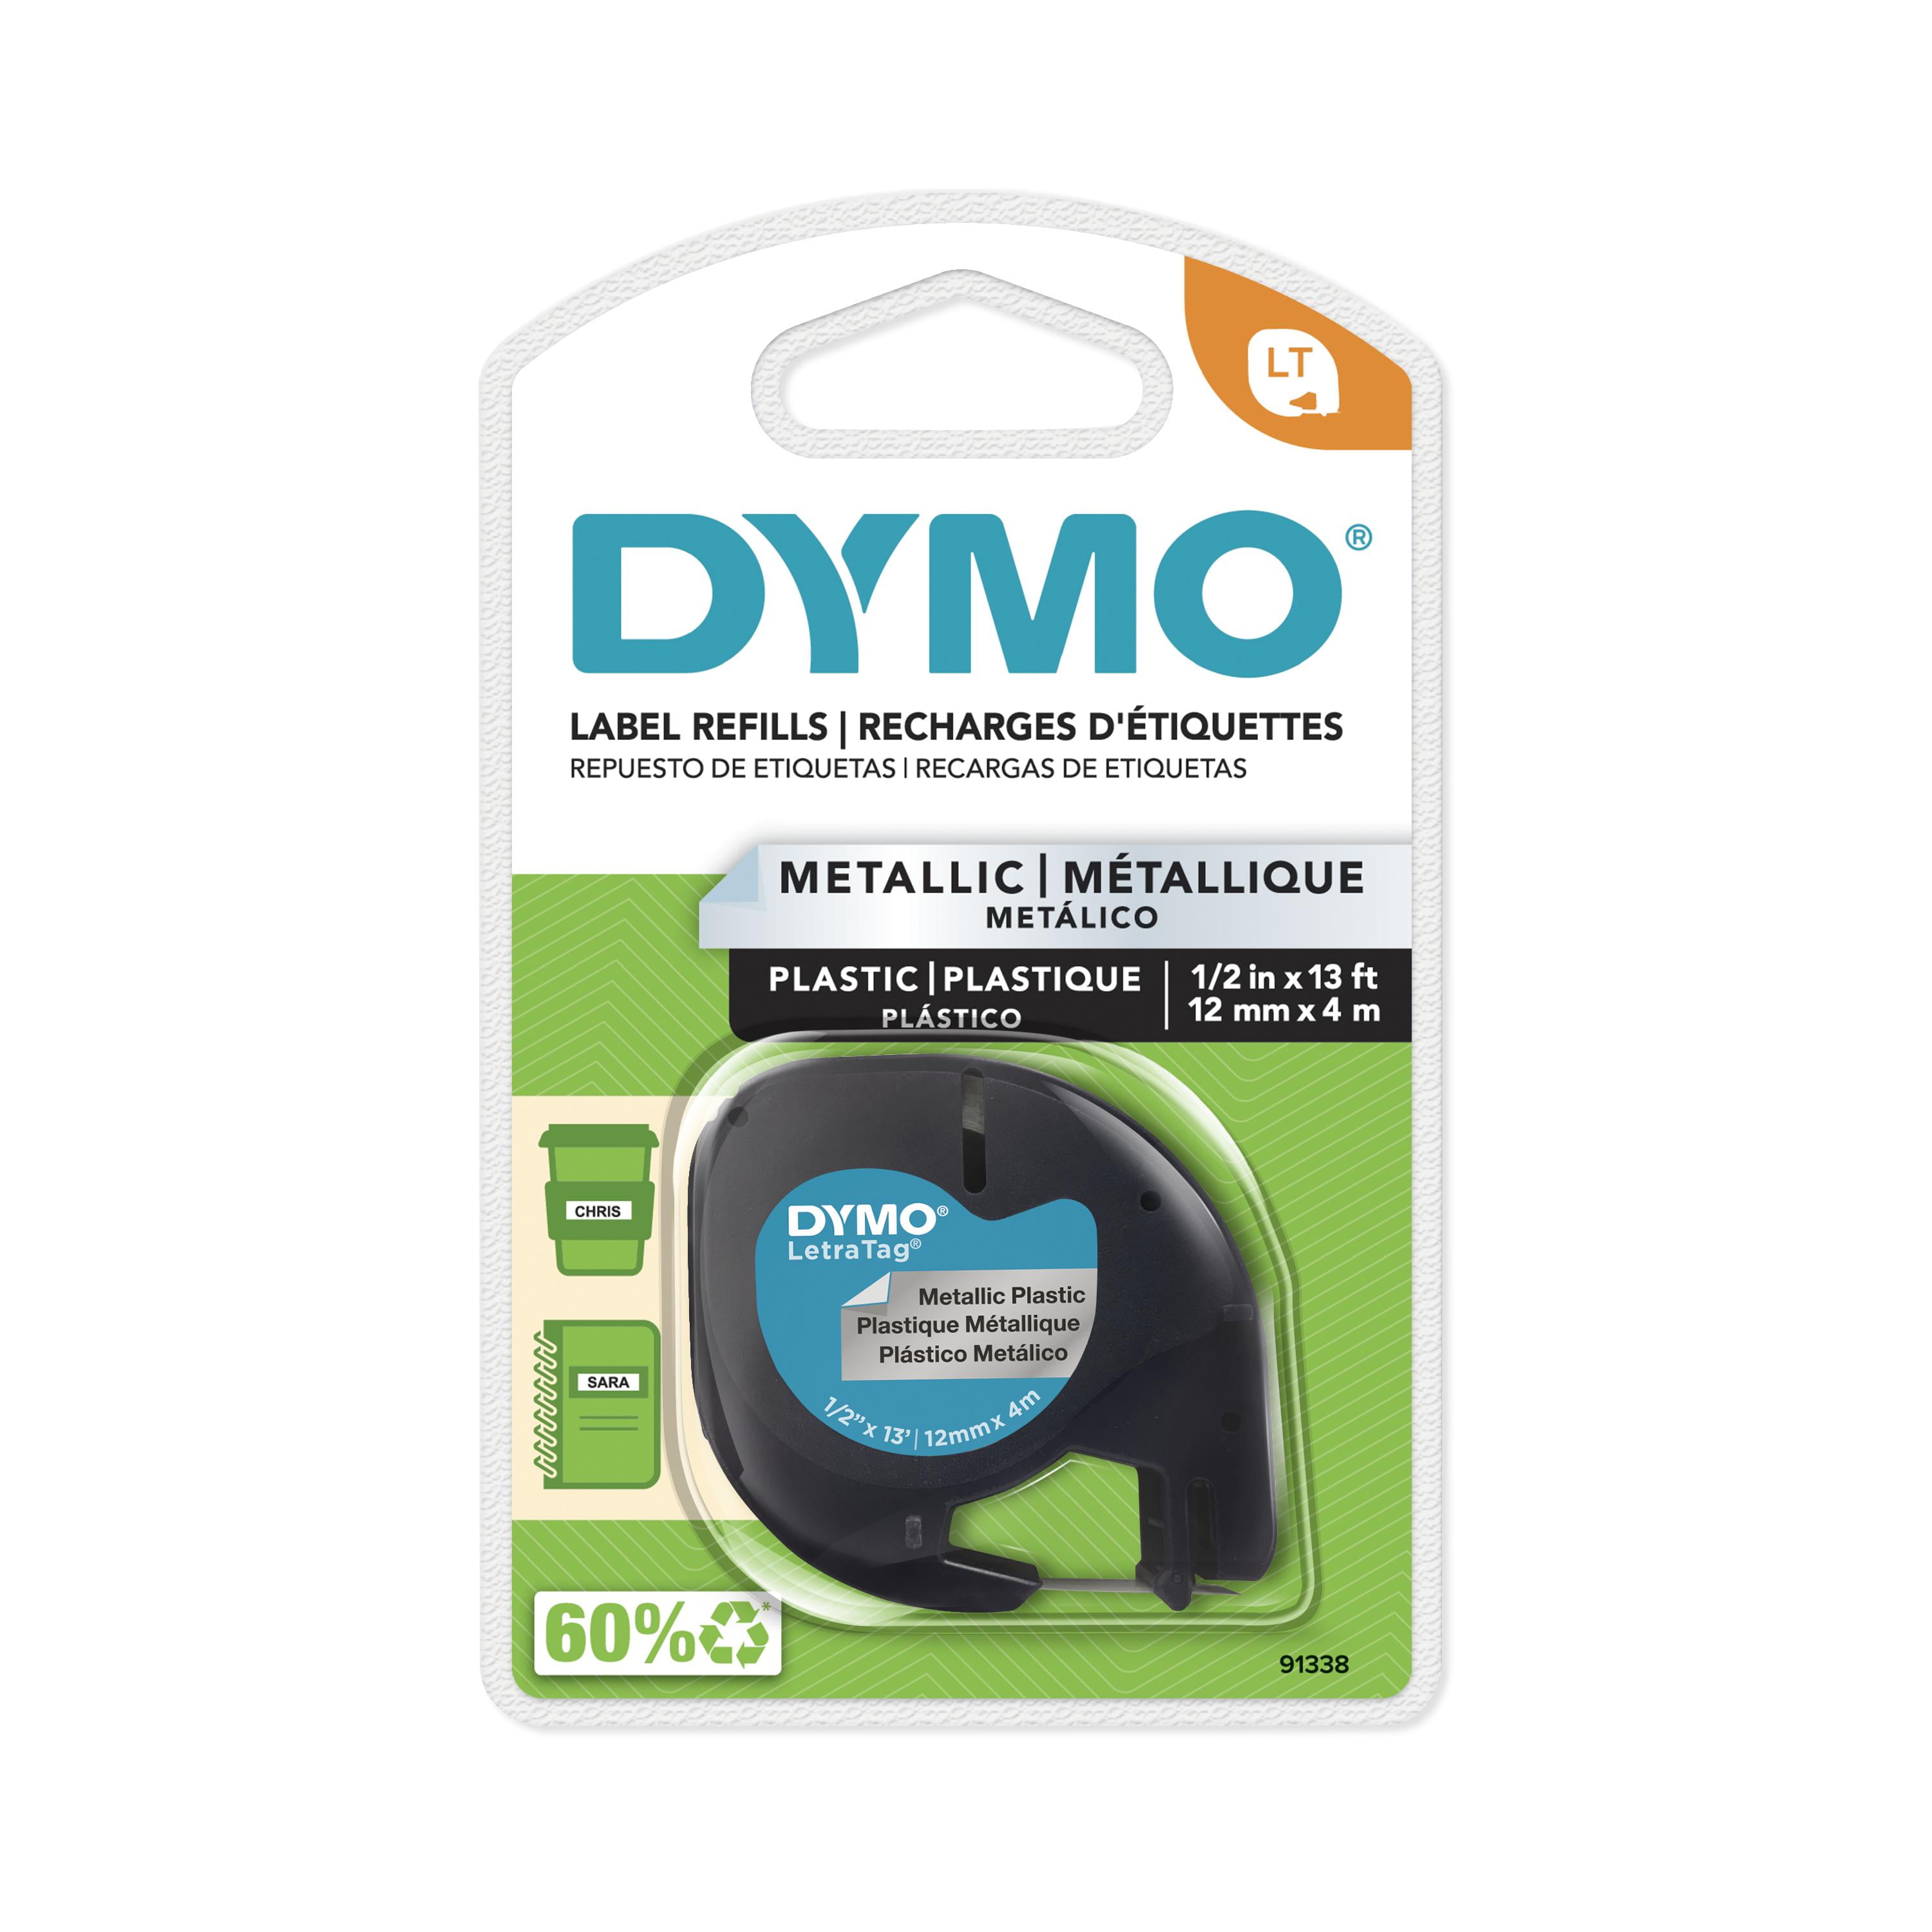 Details about   Embossing Refill Tape For DYMO MOTEX 0898130 3 Meter 7pcs/Set Maker Filling tape 